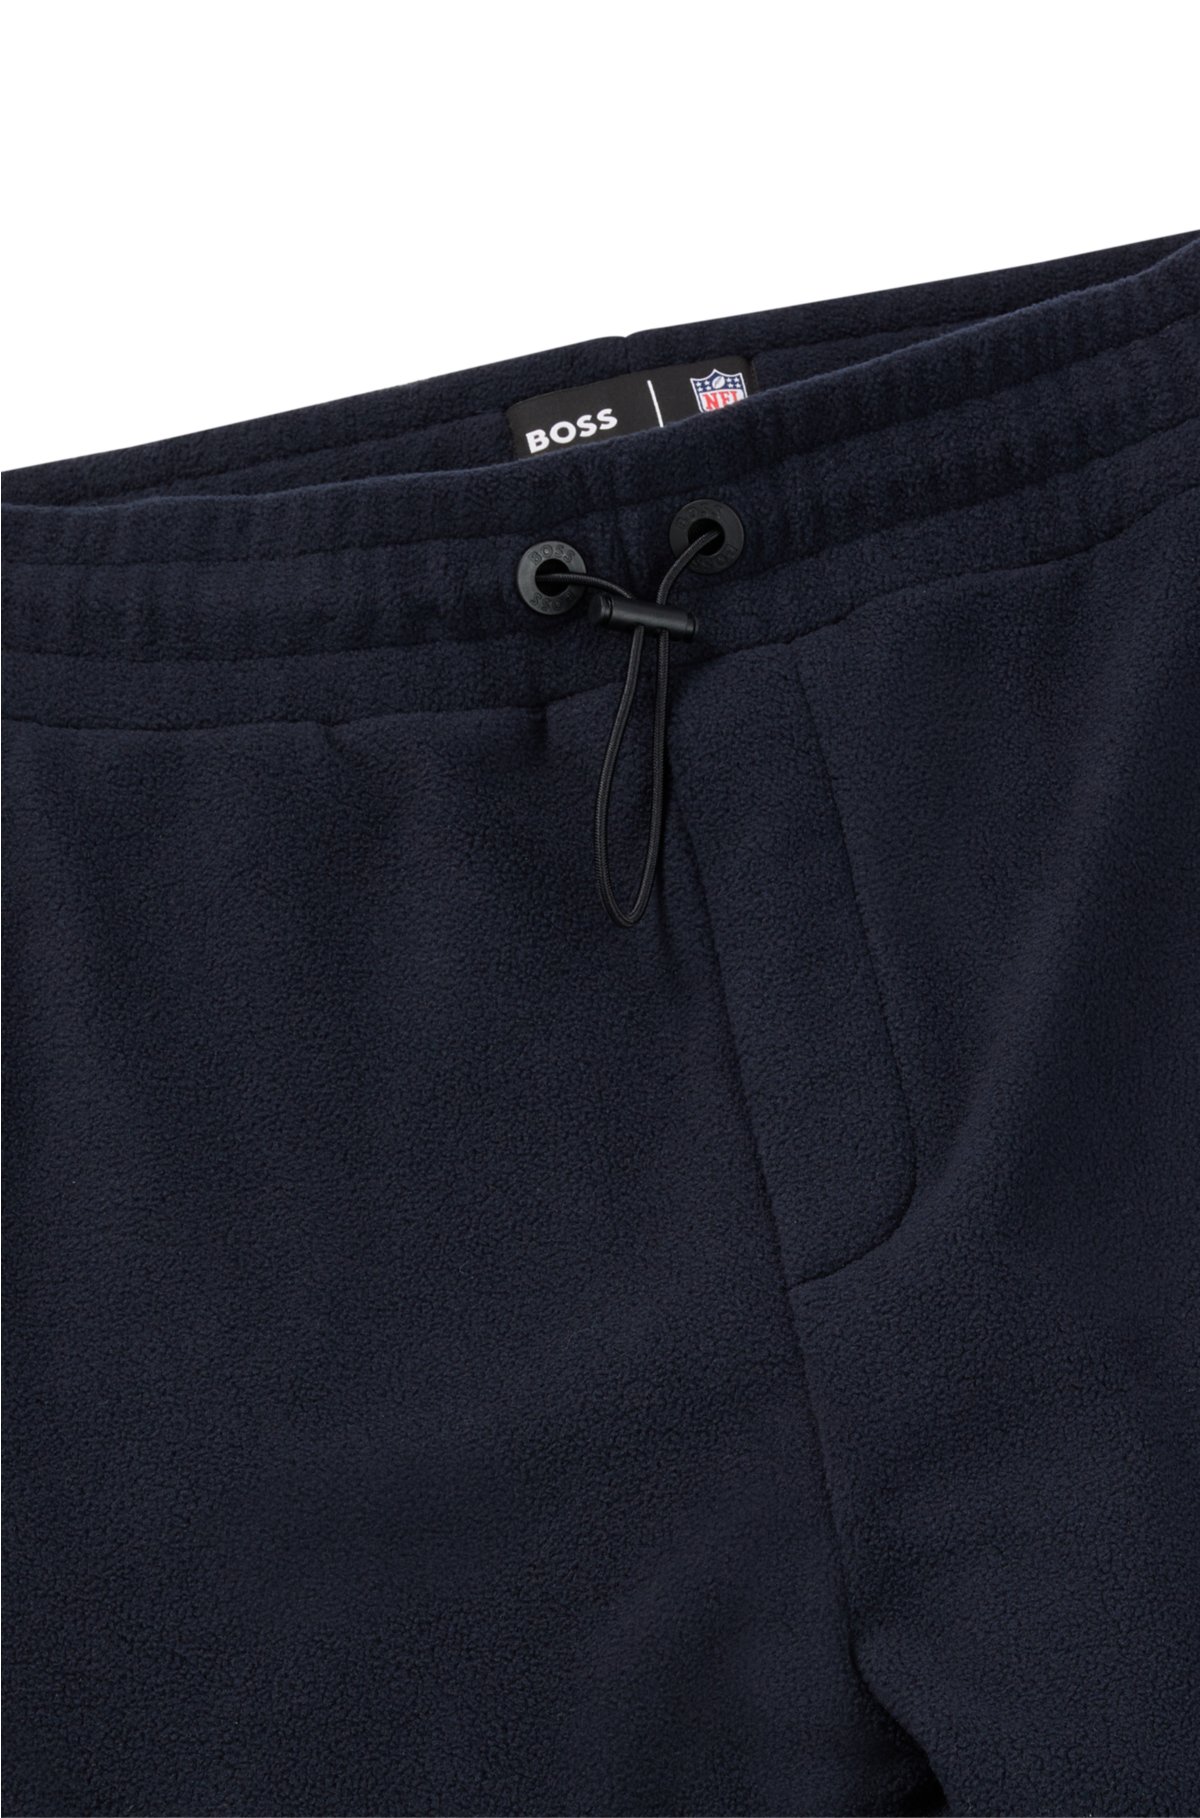  BOSS x NFL fleece tracksuit bottoms with collaborative branding, Cowboys